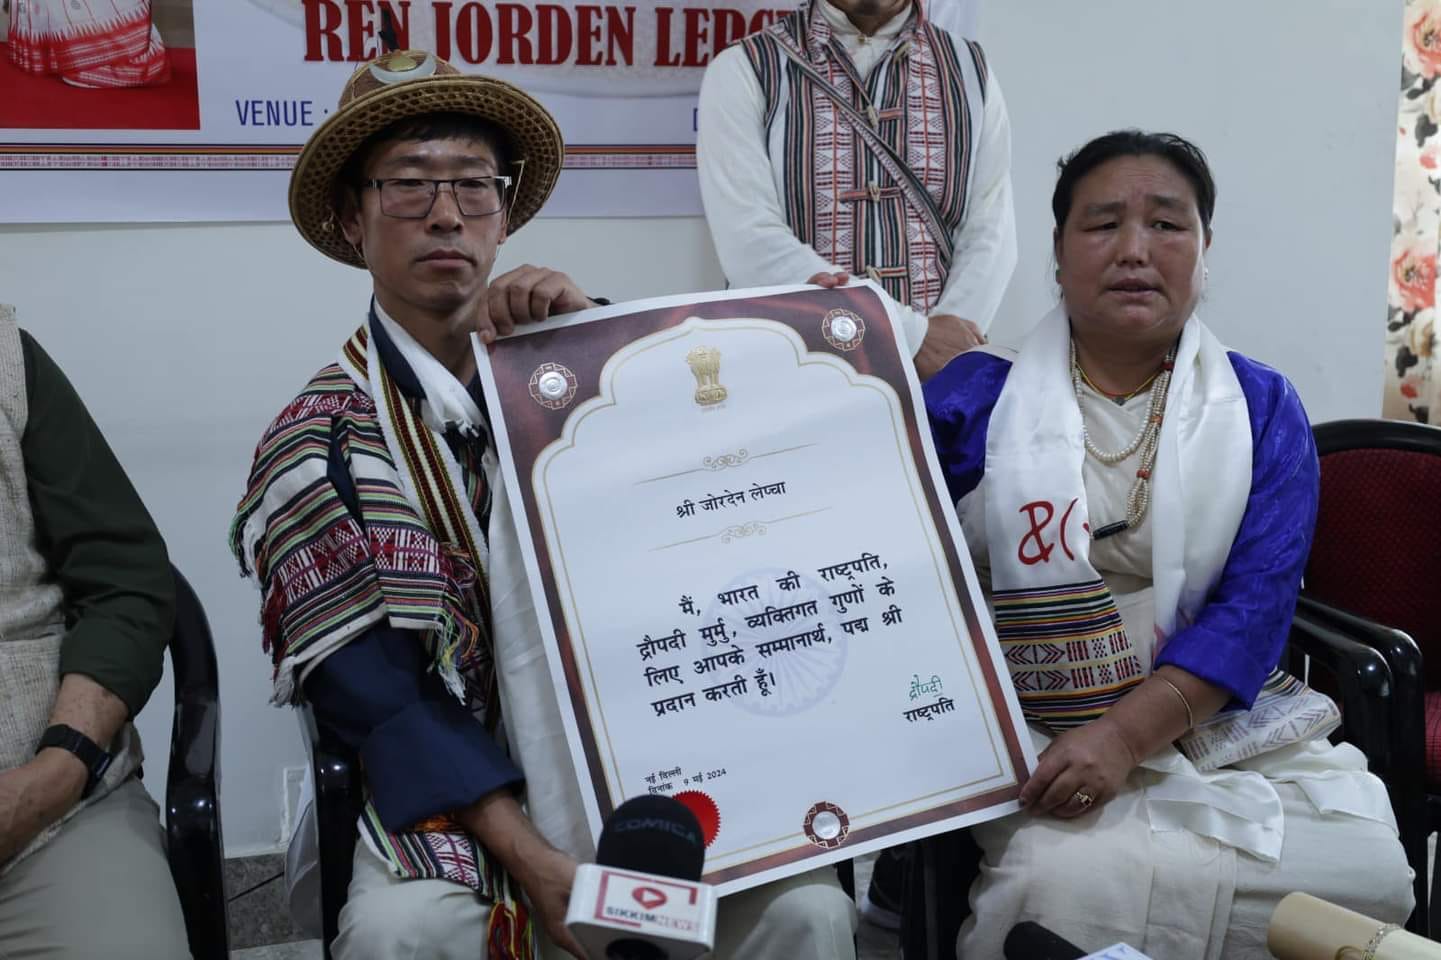 Padma Shri Awardee, Ren Jorden Lepcha welcomed with a warm reception